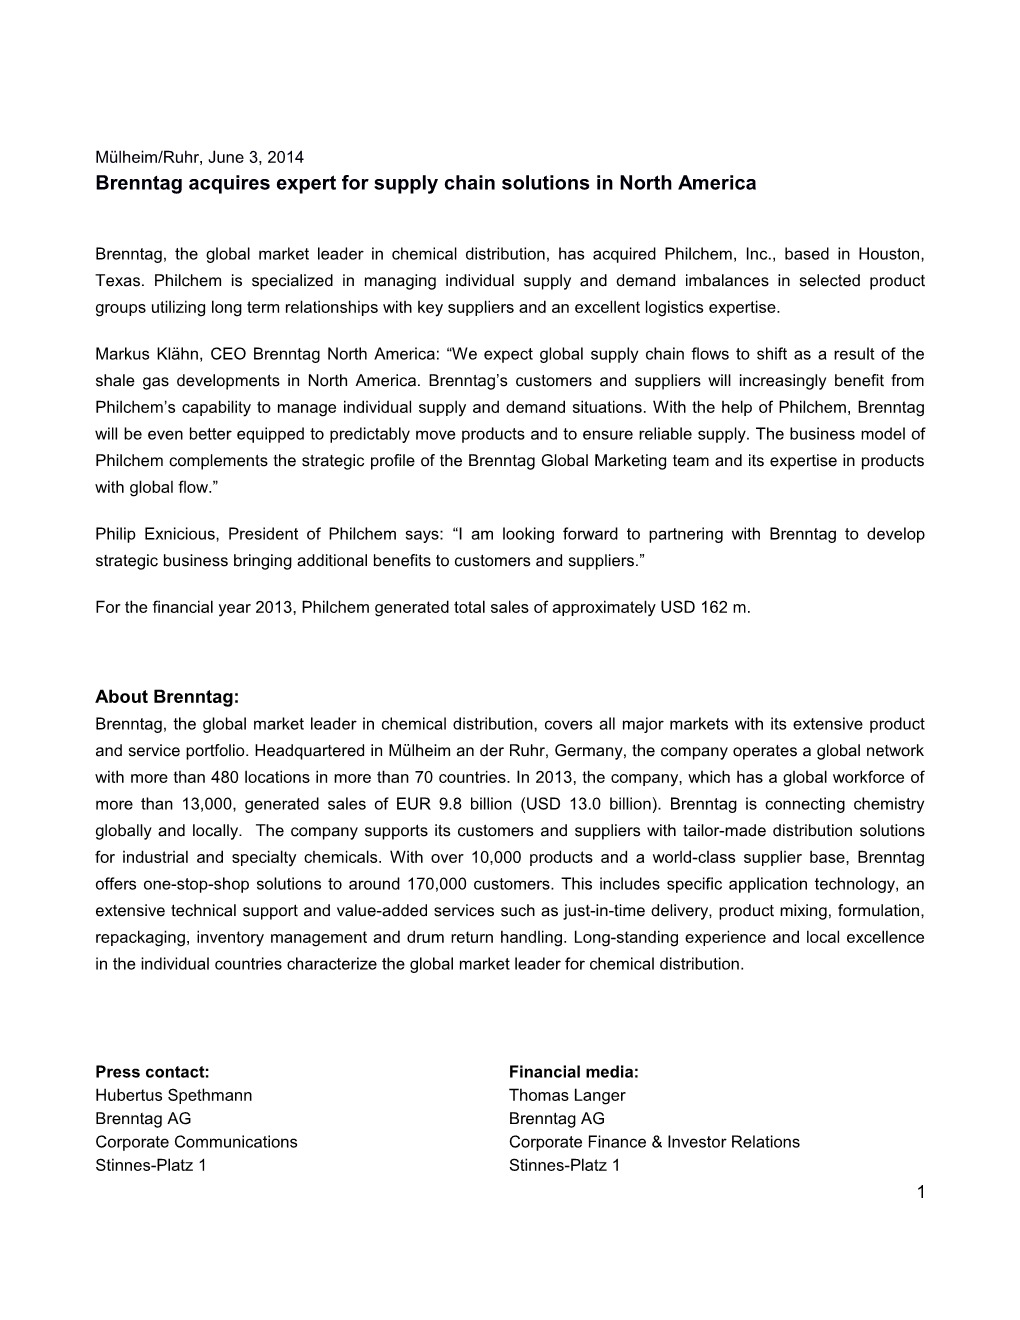 Mülheim/Ruhr, June3, 2014 Brenntag Acquires Expert Forsupply Chain Solutionsin North America